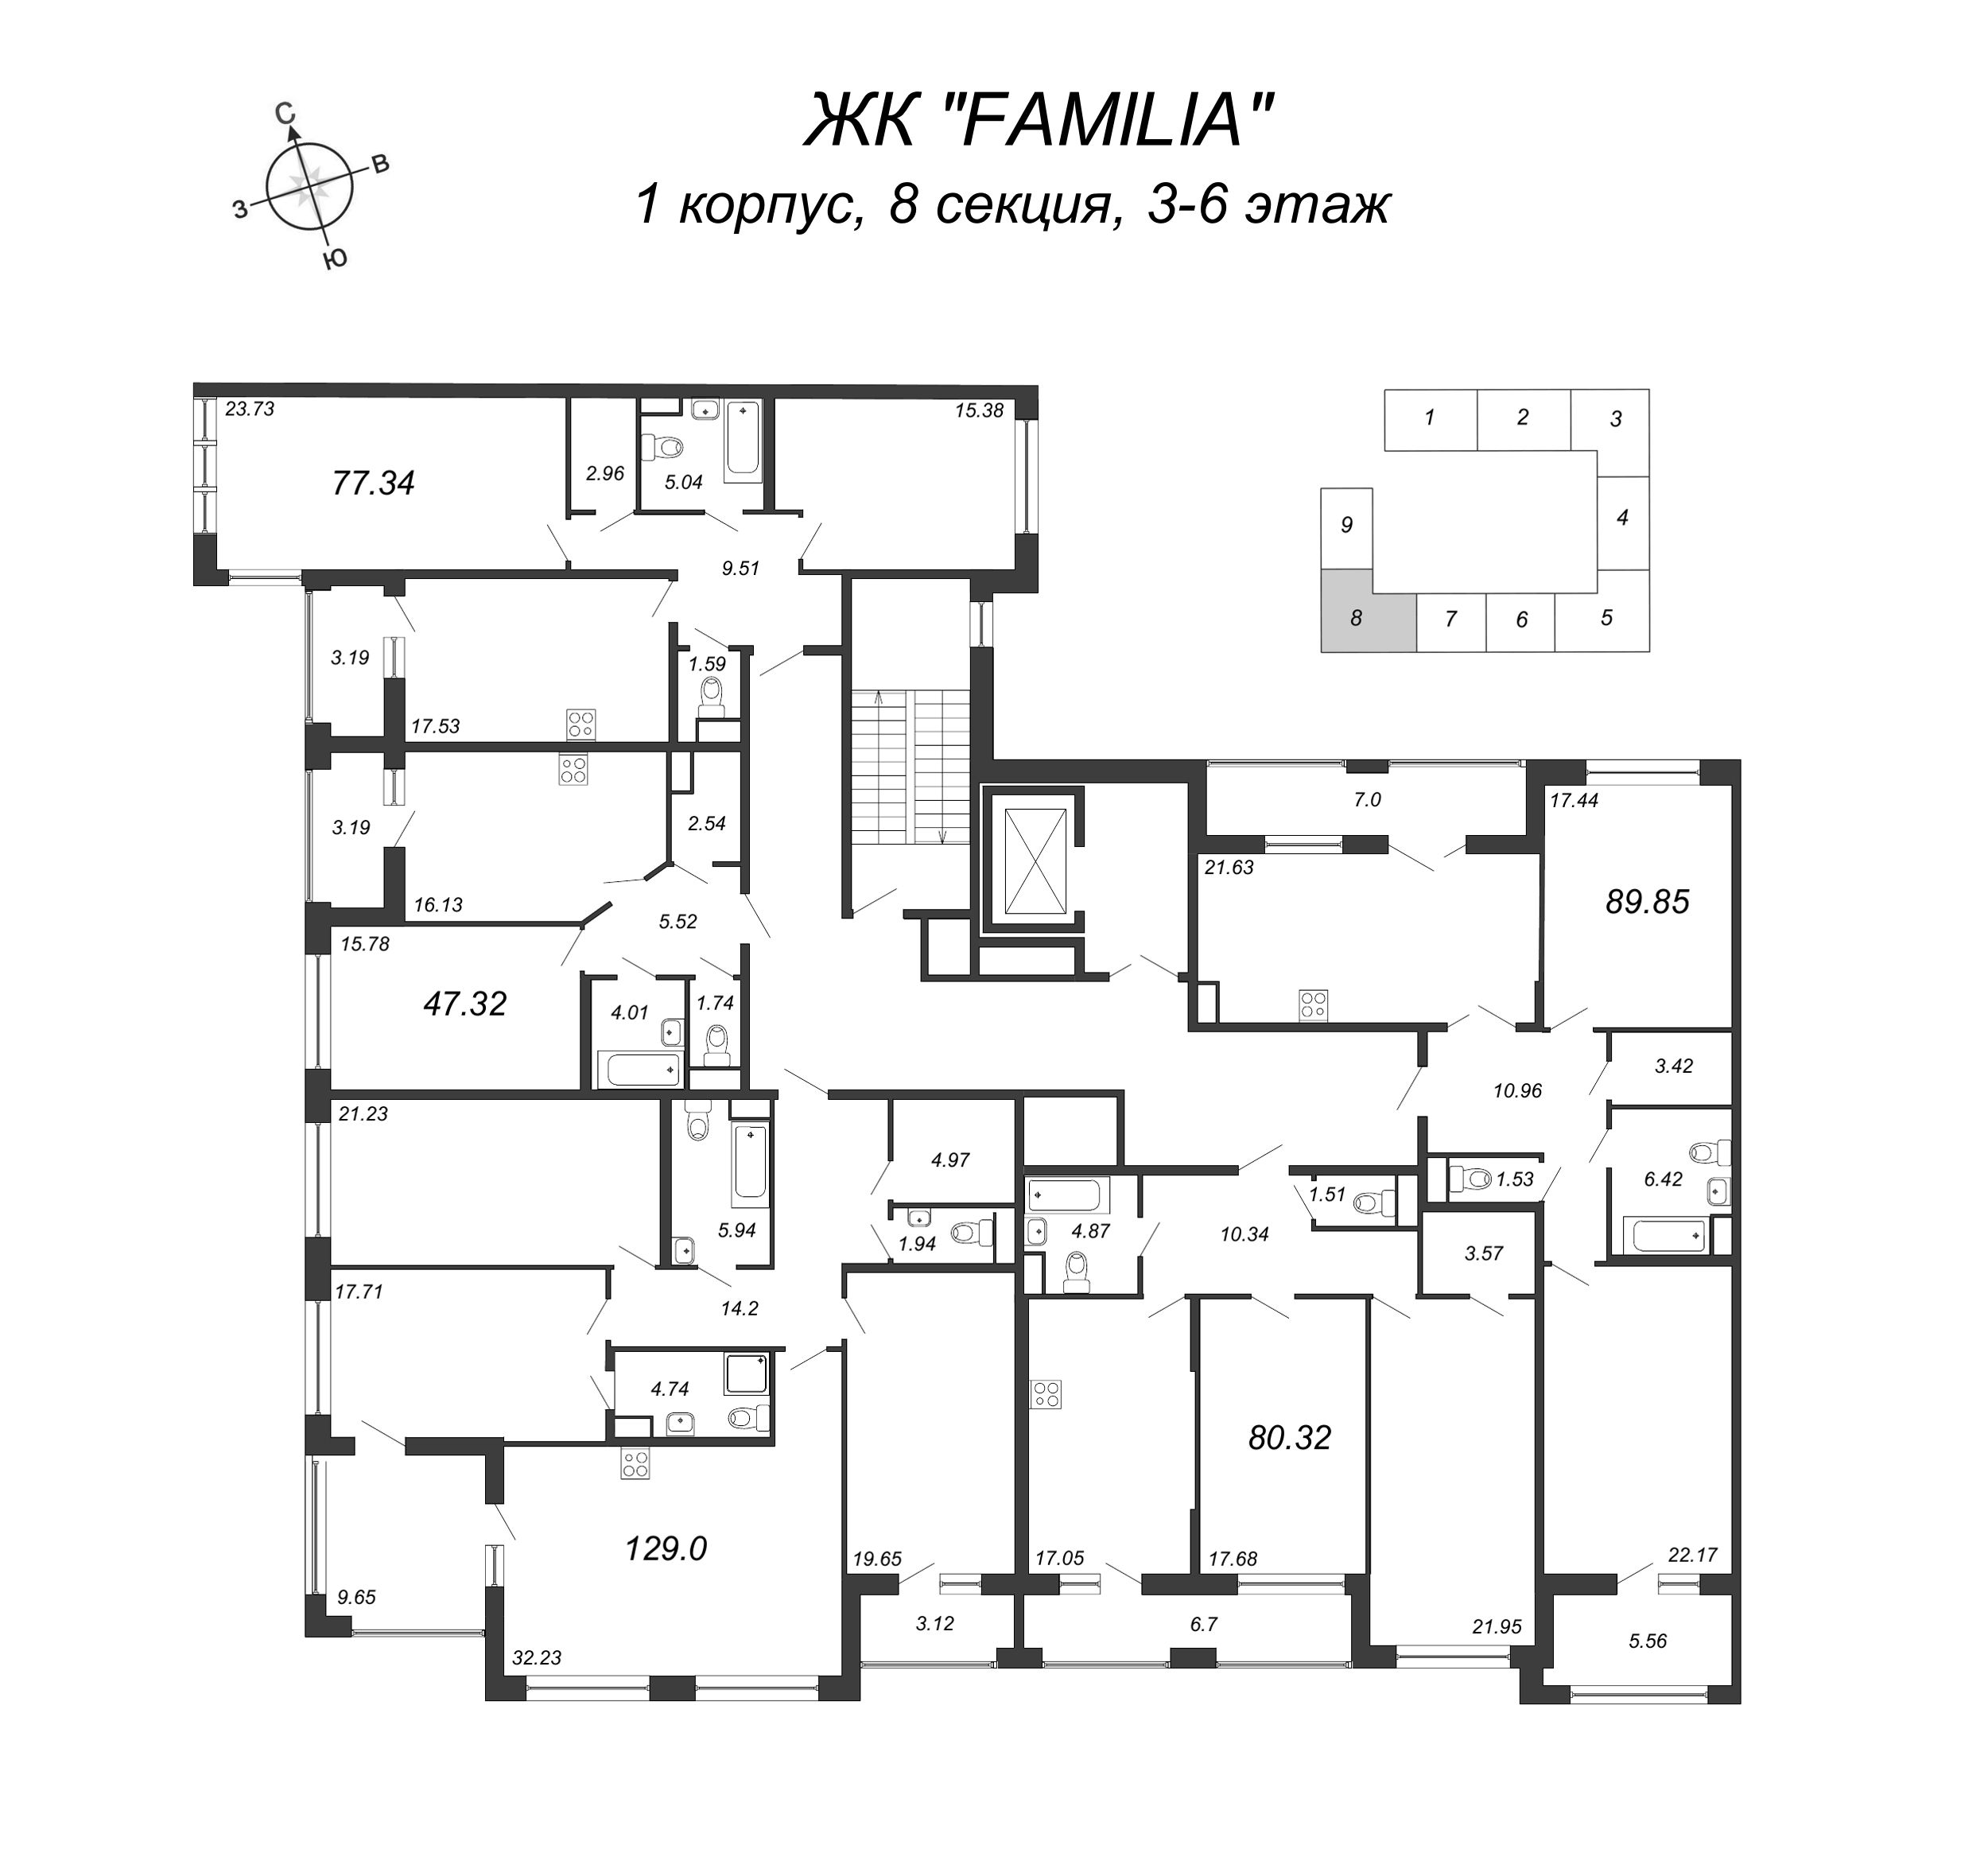 4-комнатная (Евро) квартира, 129.2 м² в ЖК "FAMILIA" - планировка этажа